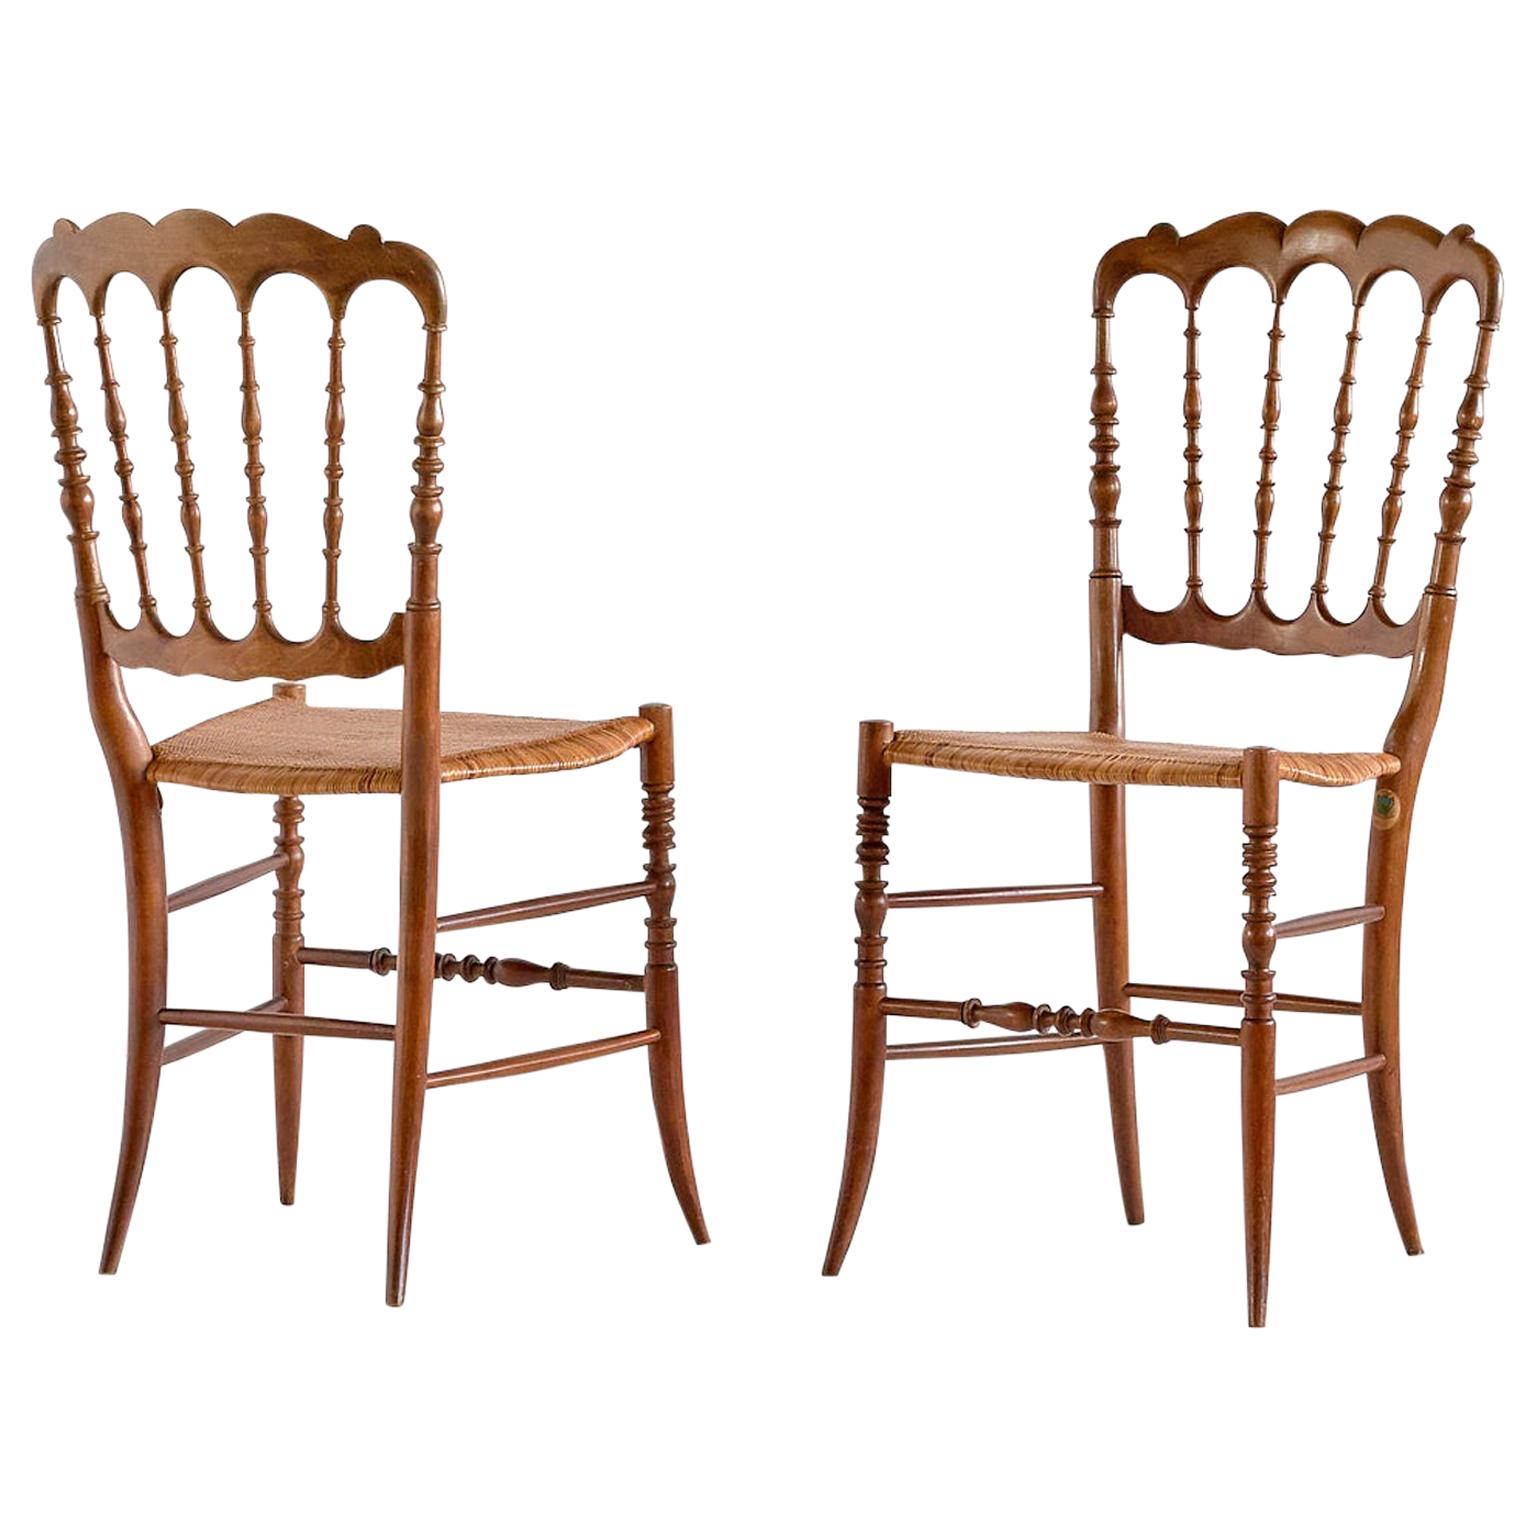 Pair of Chiavari Chairs in Beech and Cane, F.lli Zunino & Rivarola, Italy, 1950s